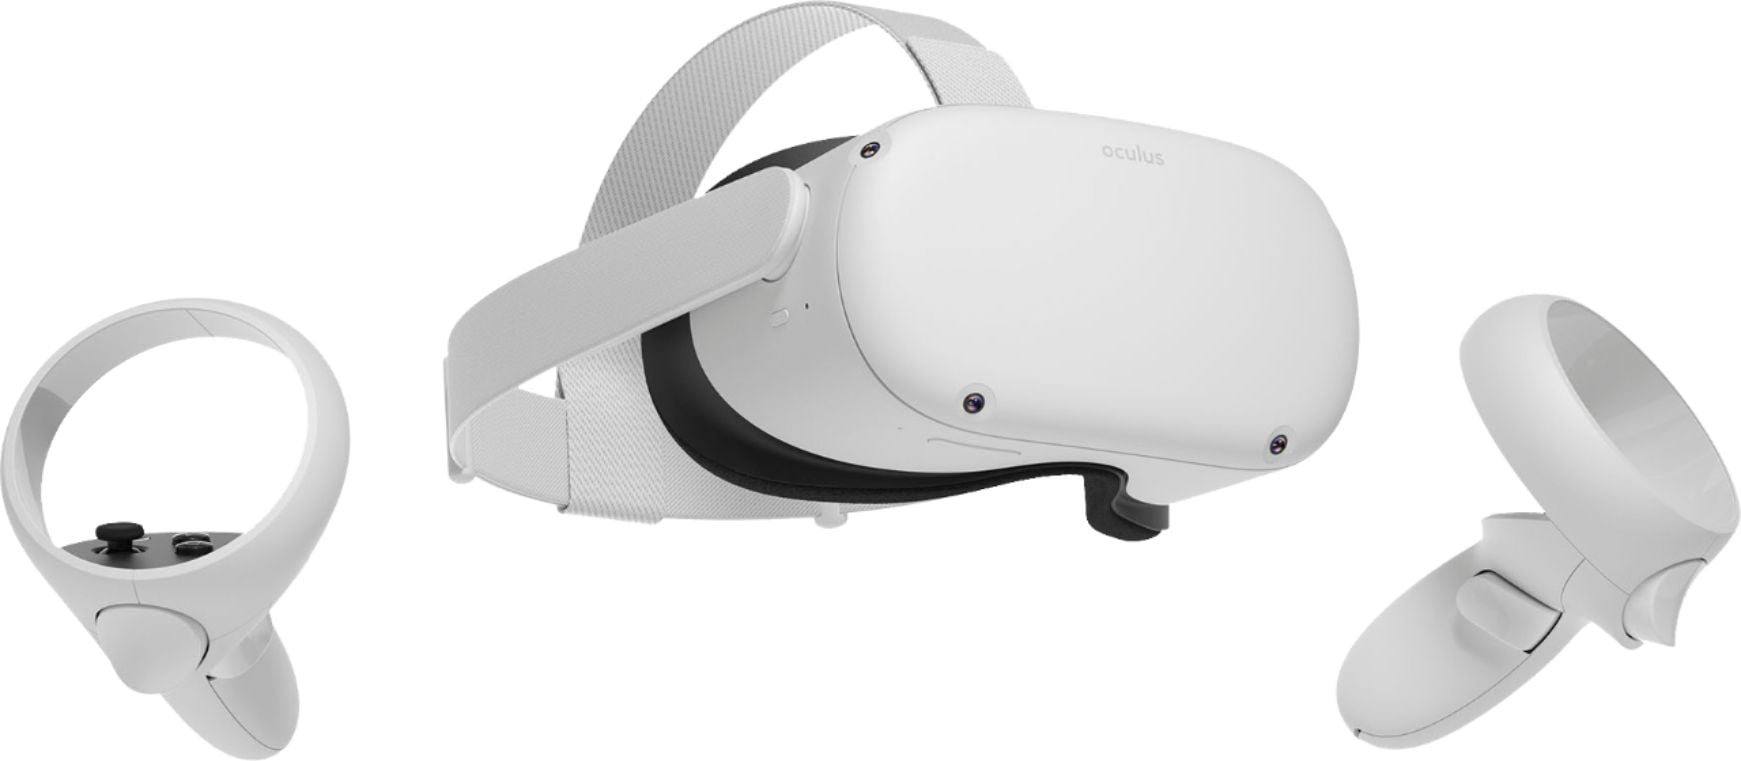 Oculus Quest 2 Advanced Virtual Reality Headset   GB   Walmart.ca